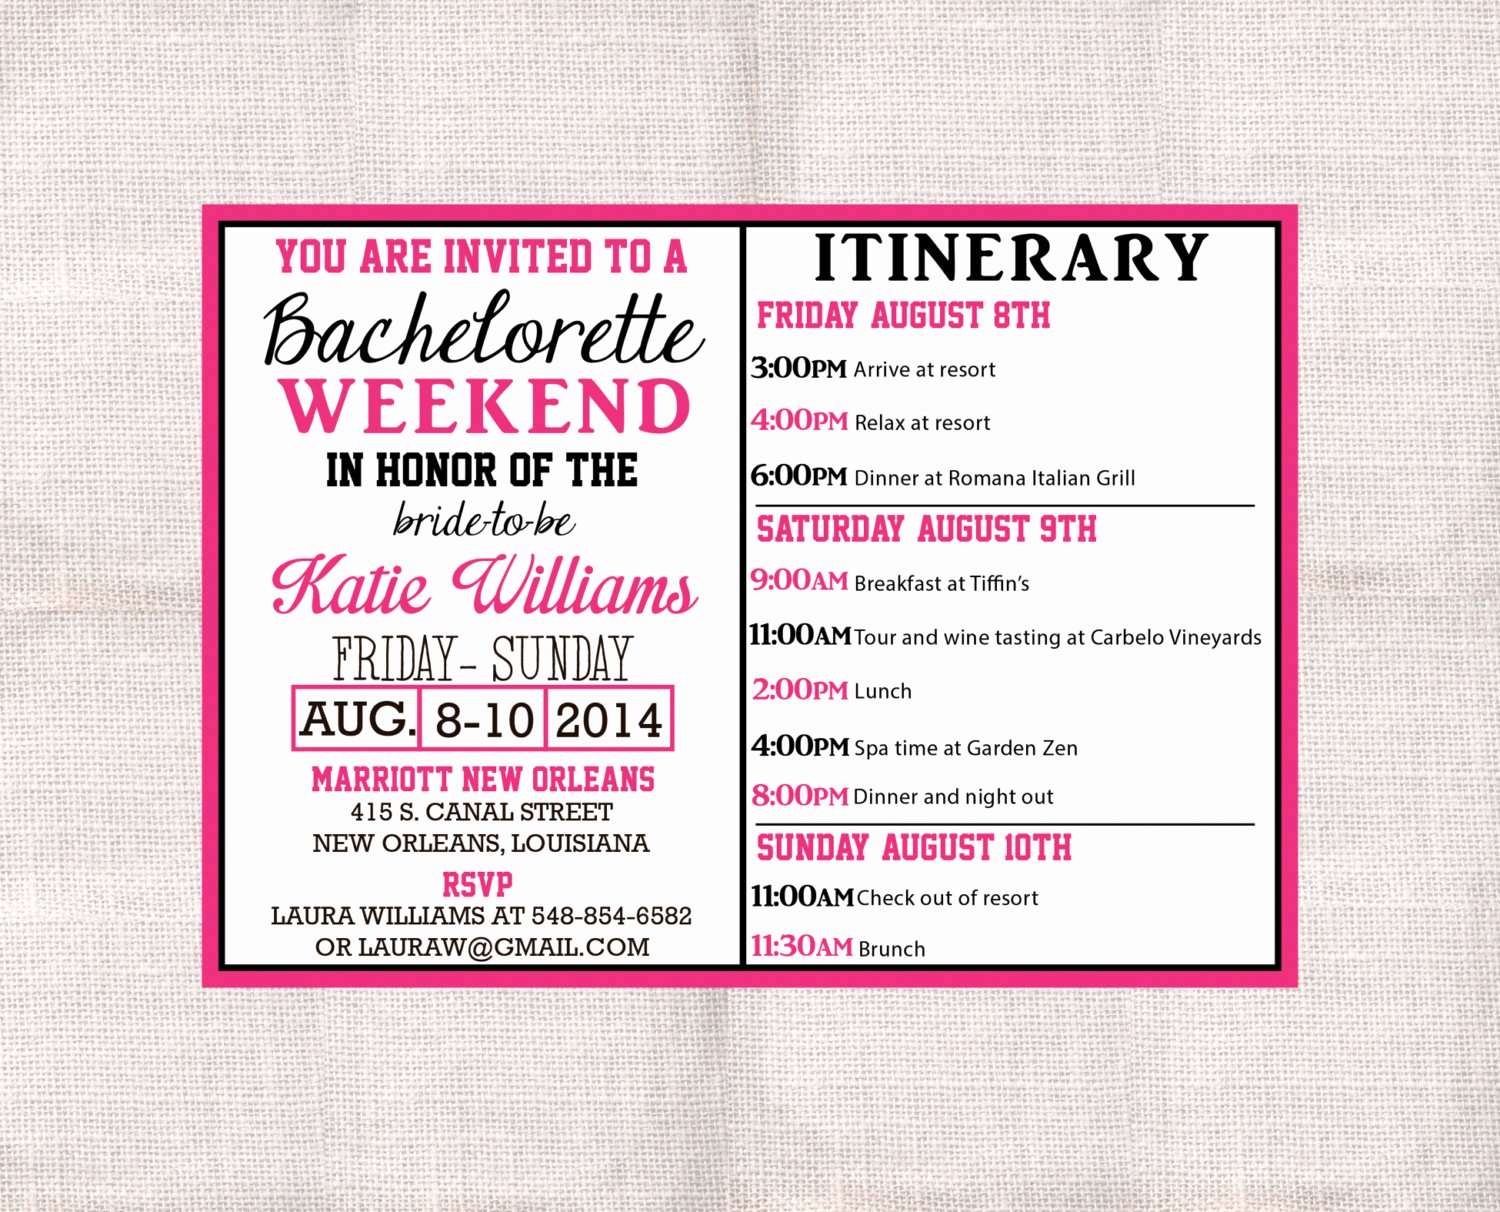 Bachelorette Itinerary Template Free Fresh Bachelorette Party Weekend Invitation and Itinerary Custom